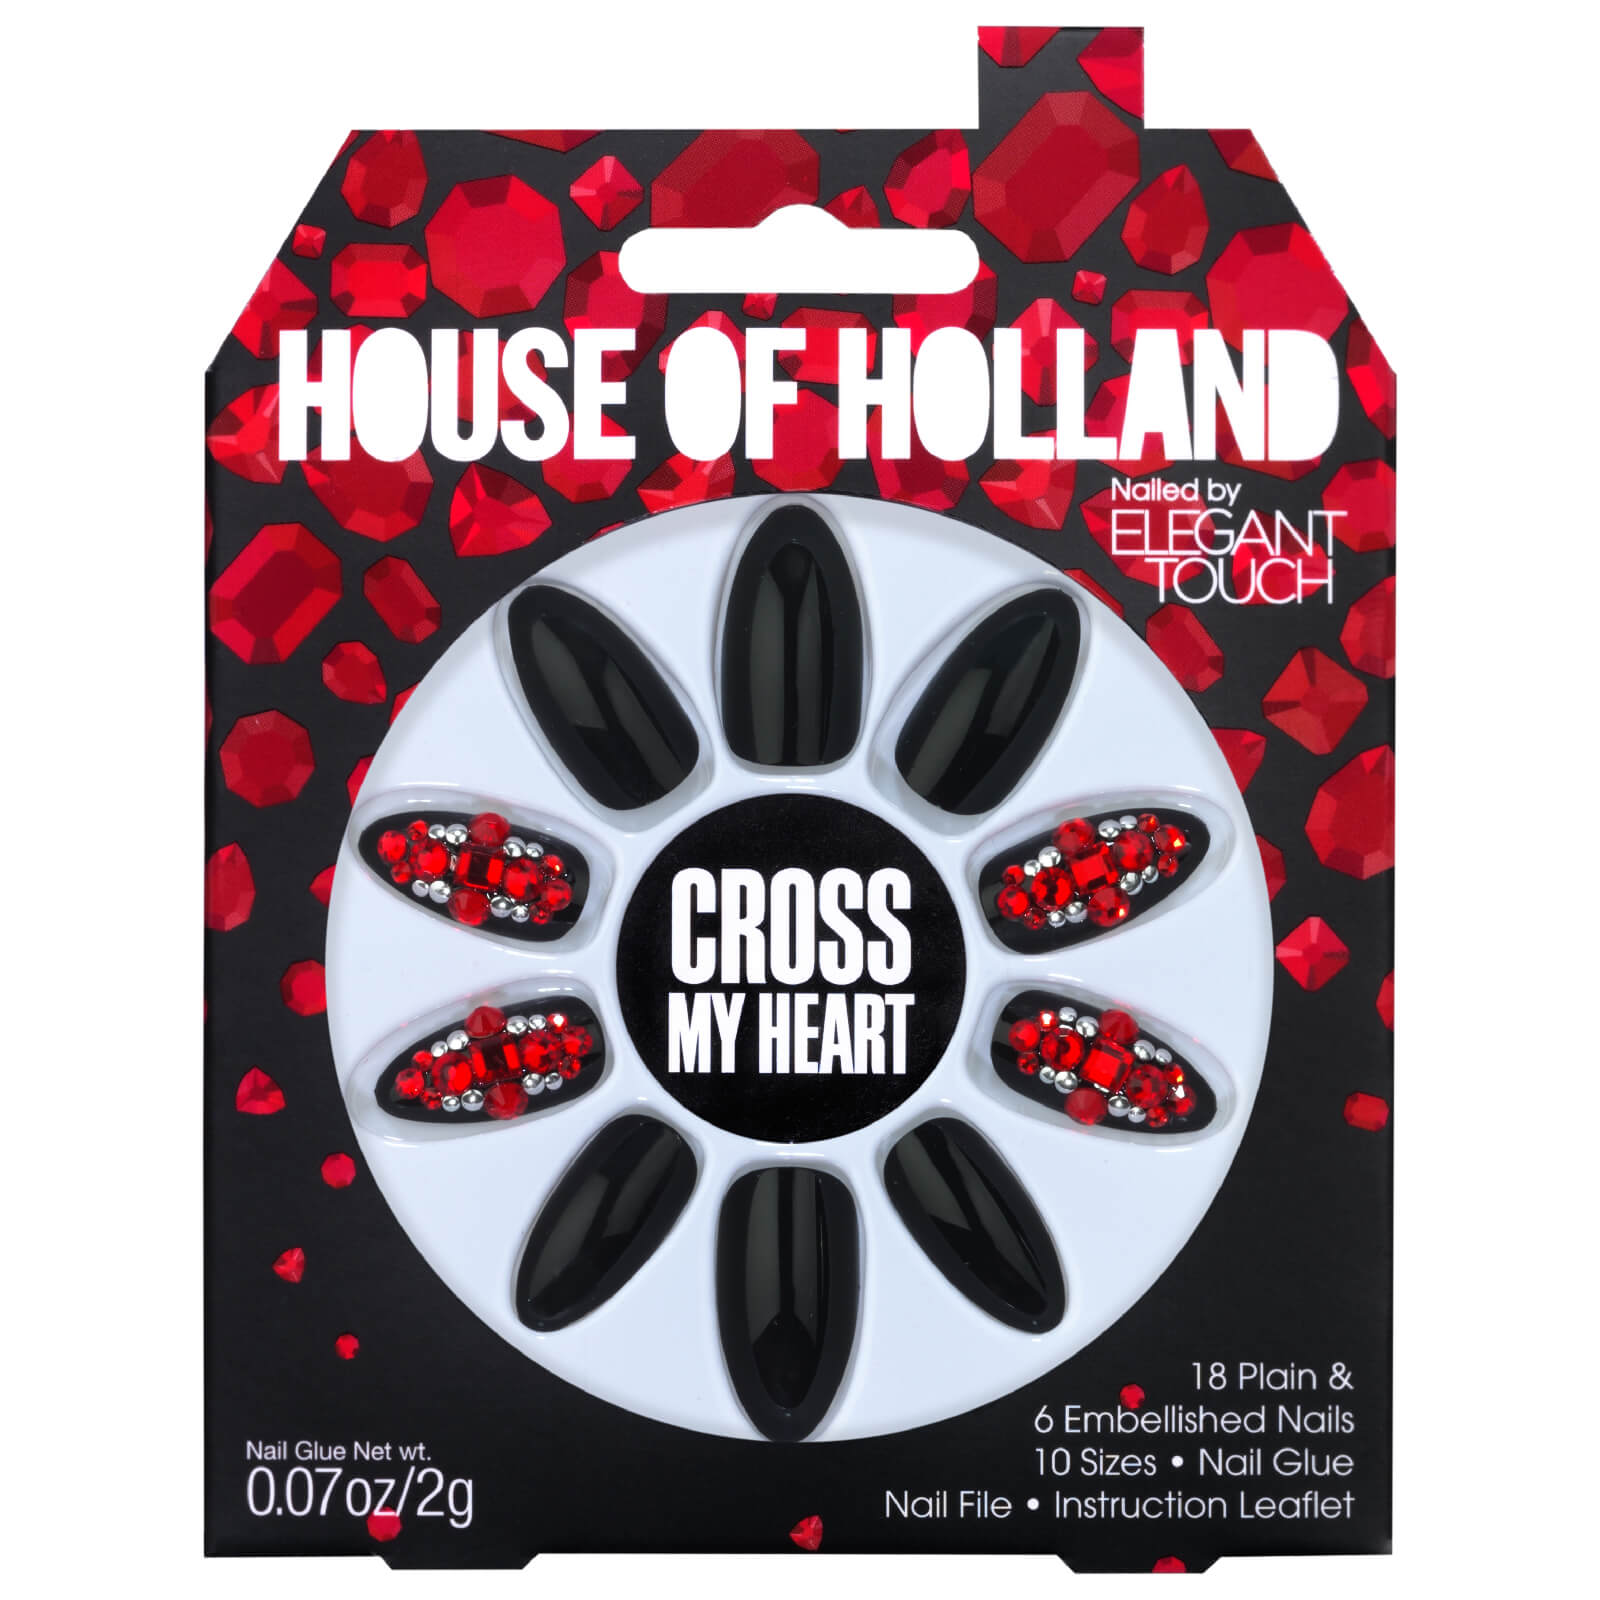 Uñas para fiesta House of Holland de Elegant Touch - Cross My Heart